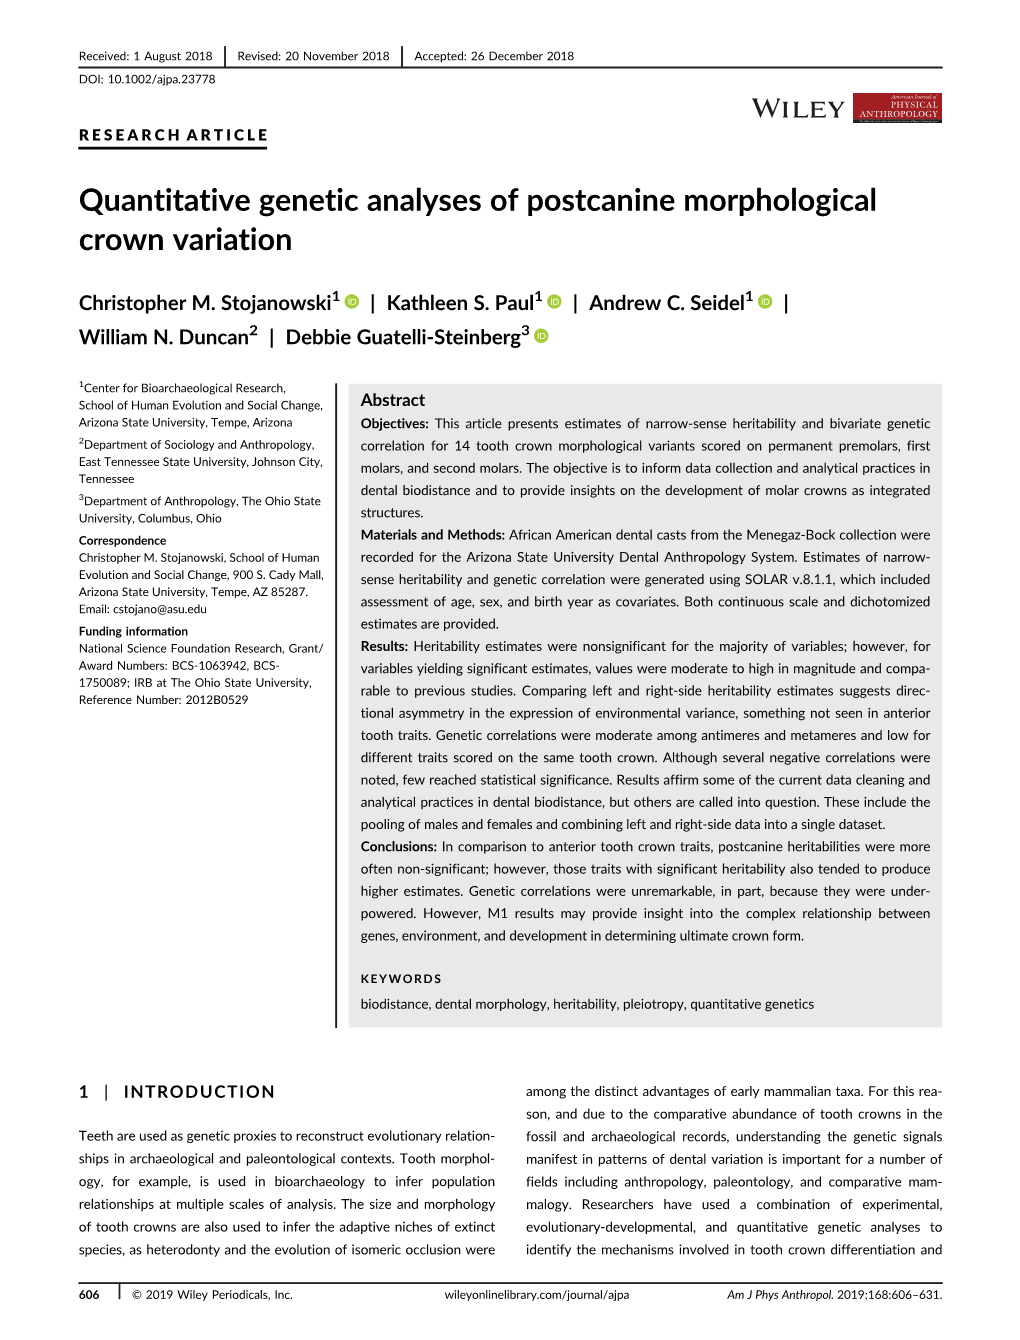 Quantitative Genetic Analyses of Postcanine Morphological Crown Variation